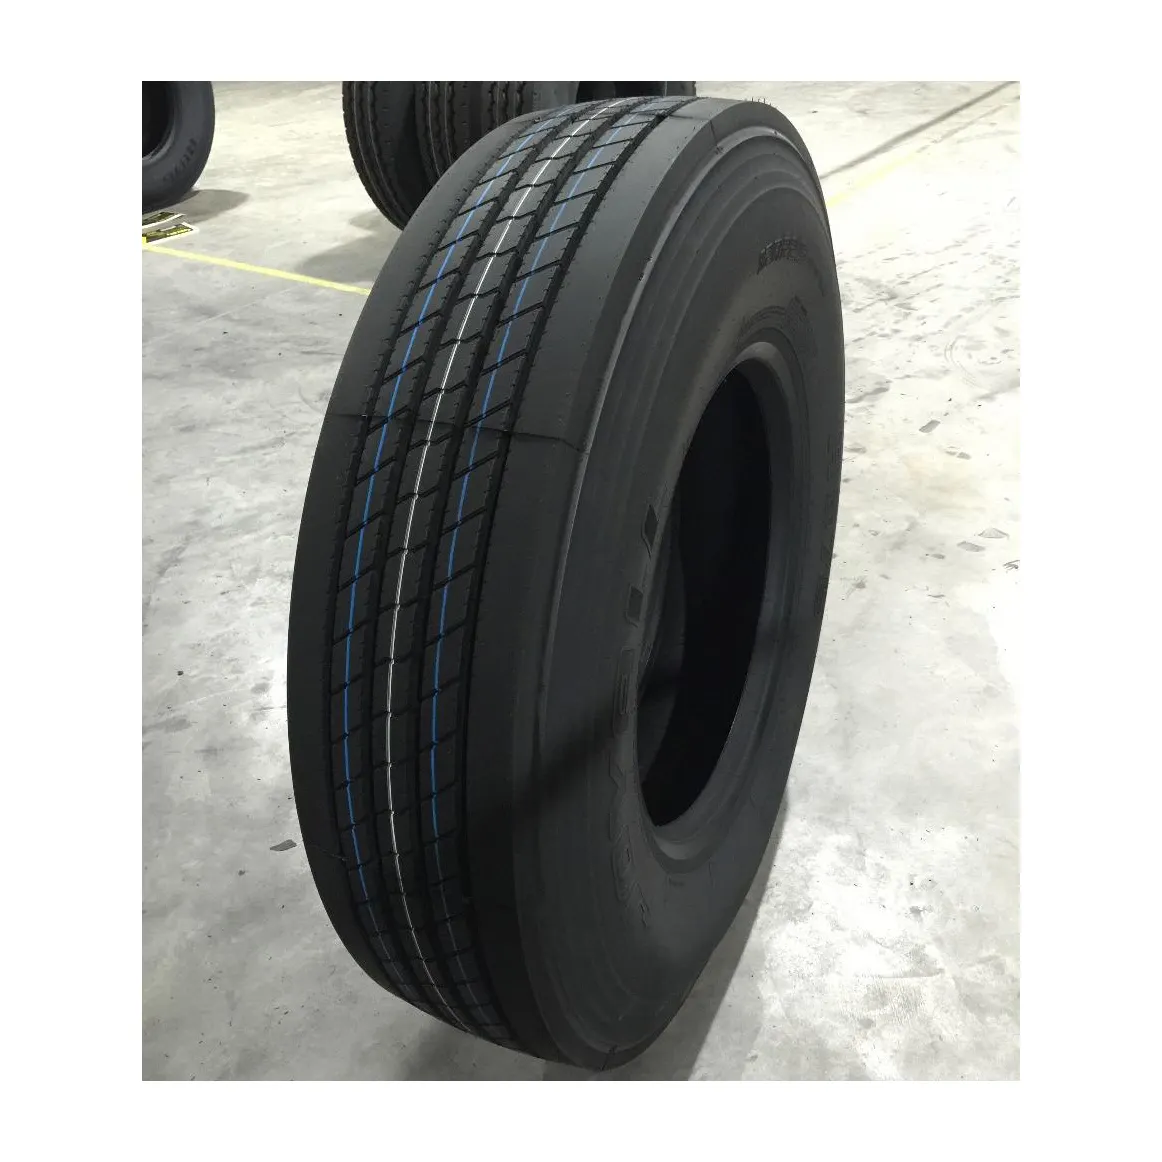 Wholesale Cheap Price Used Tires In Bulk